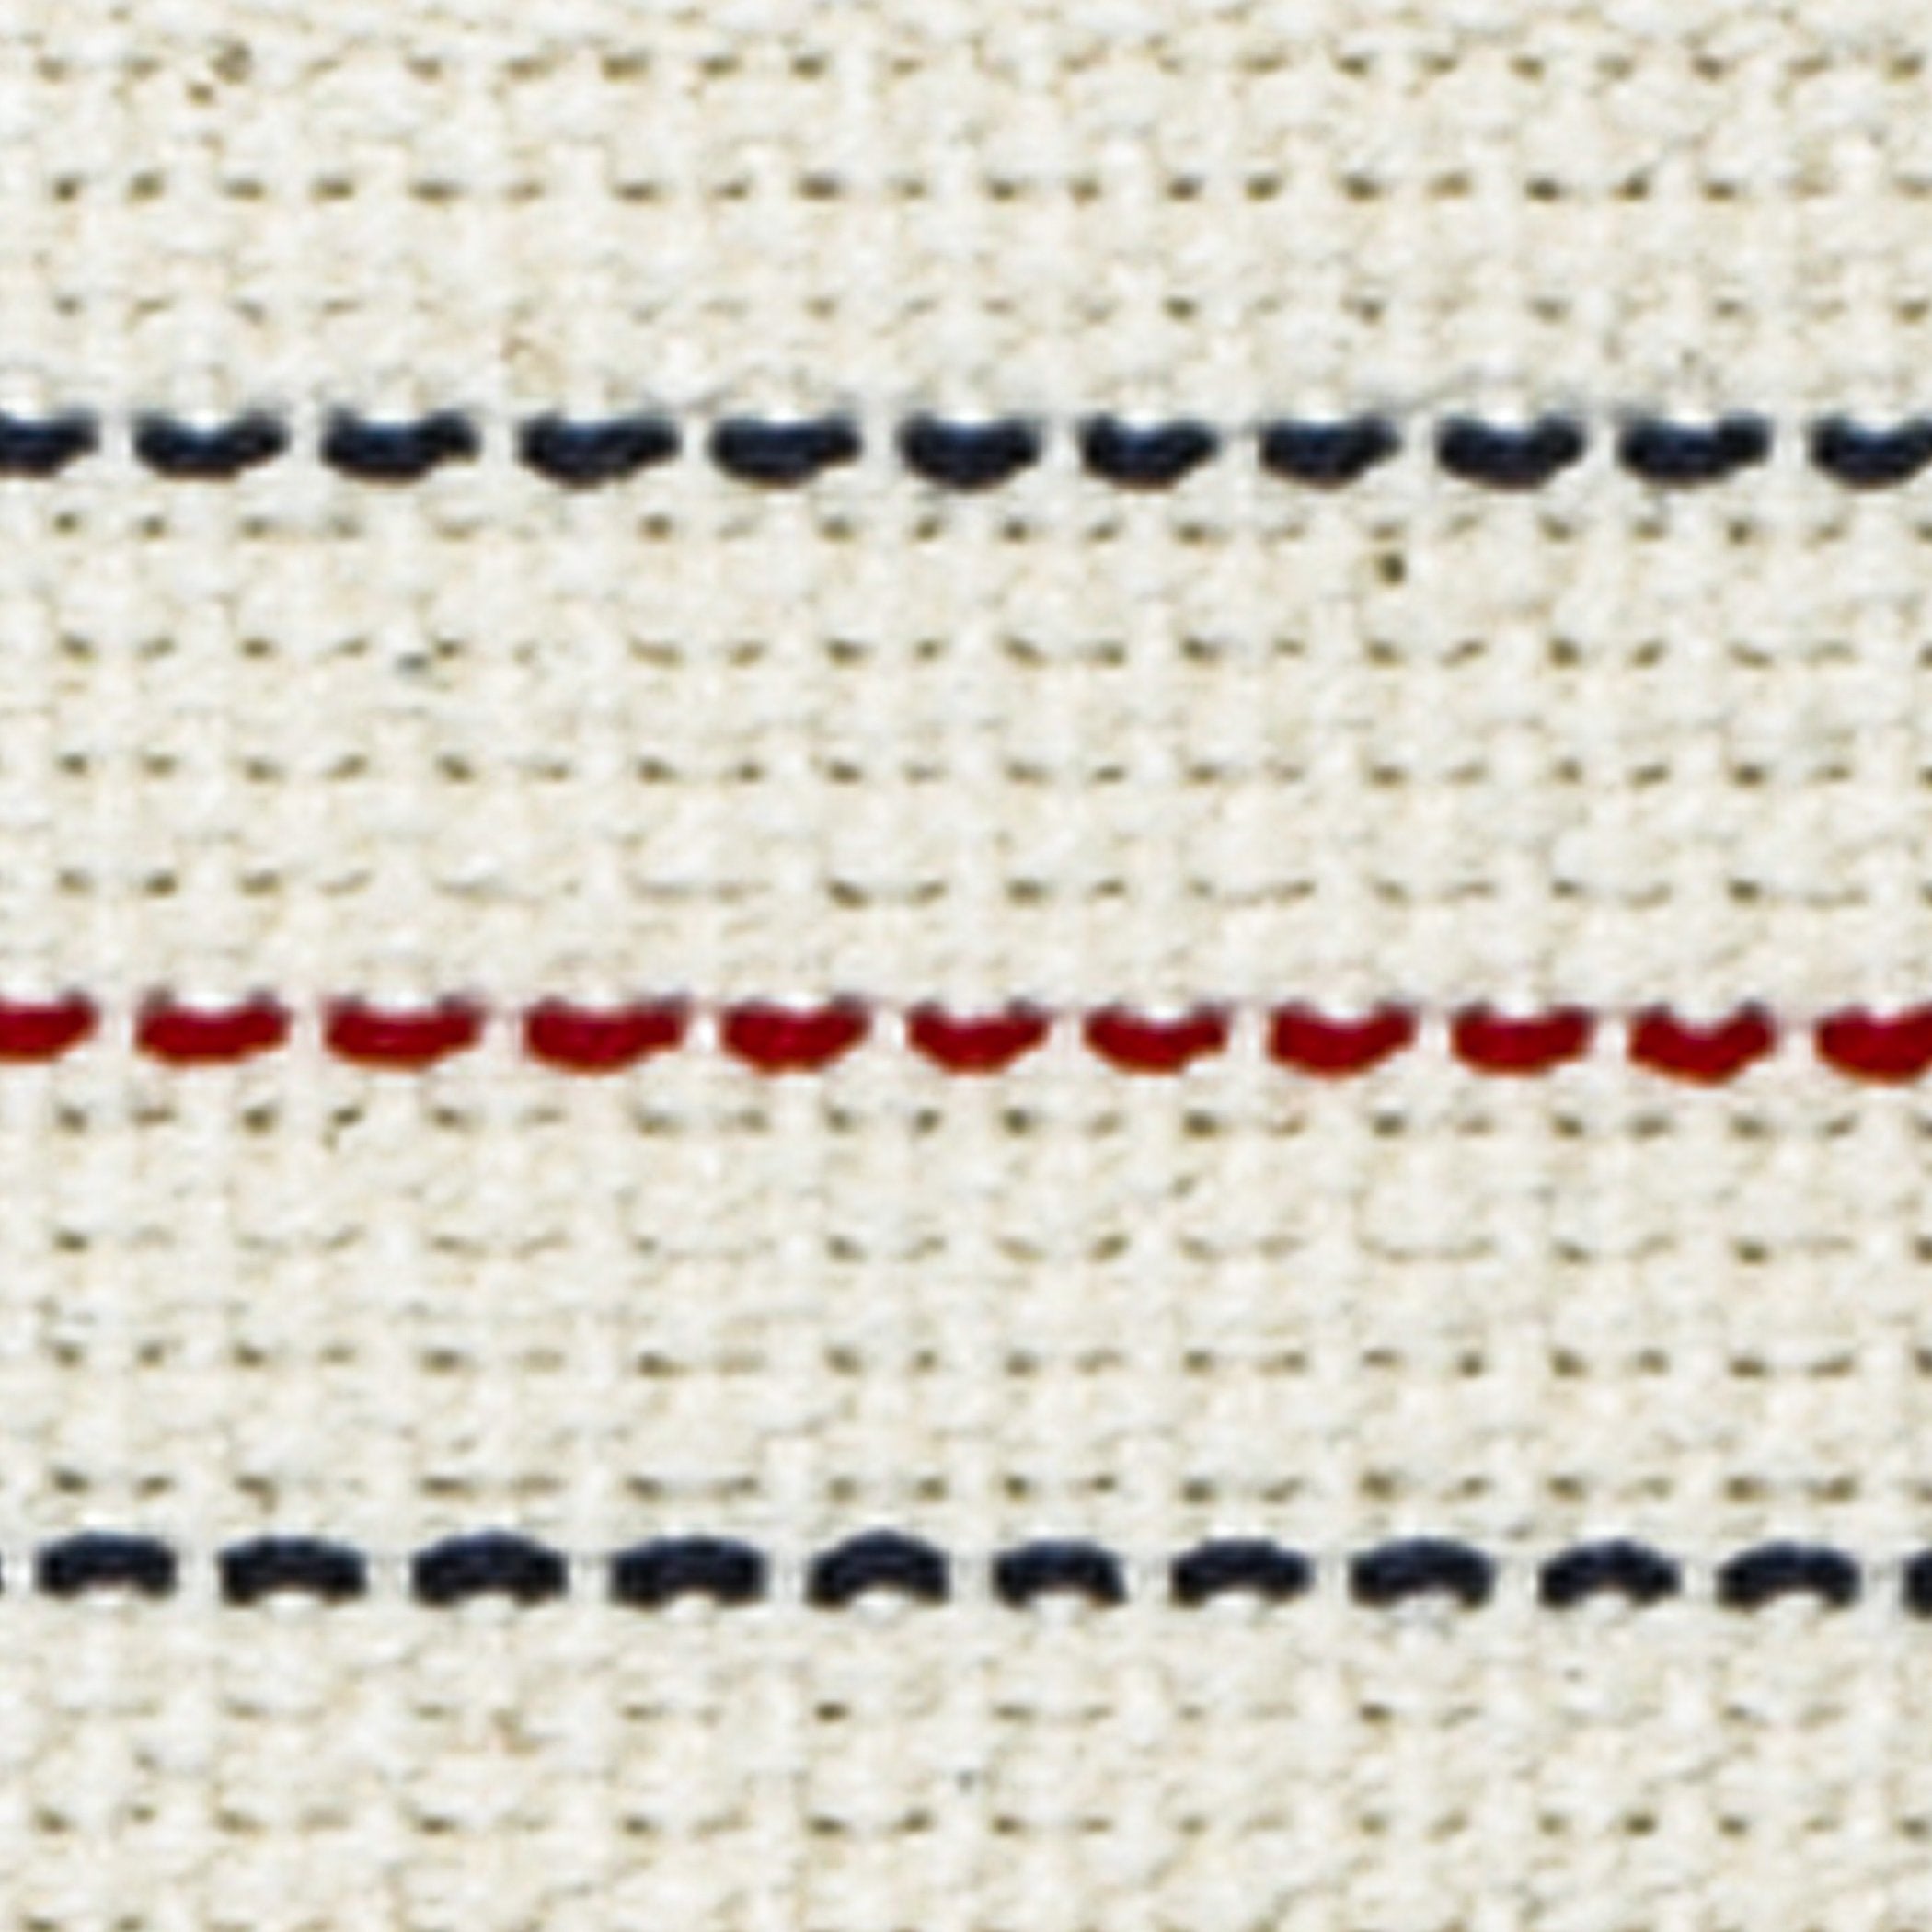 Gait Belt SkiL-Care 60 Inch Length Pinstripe Cotton